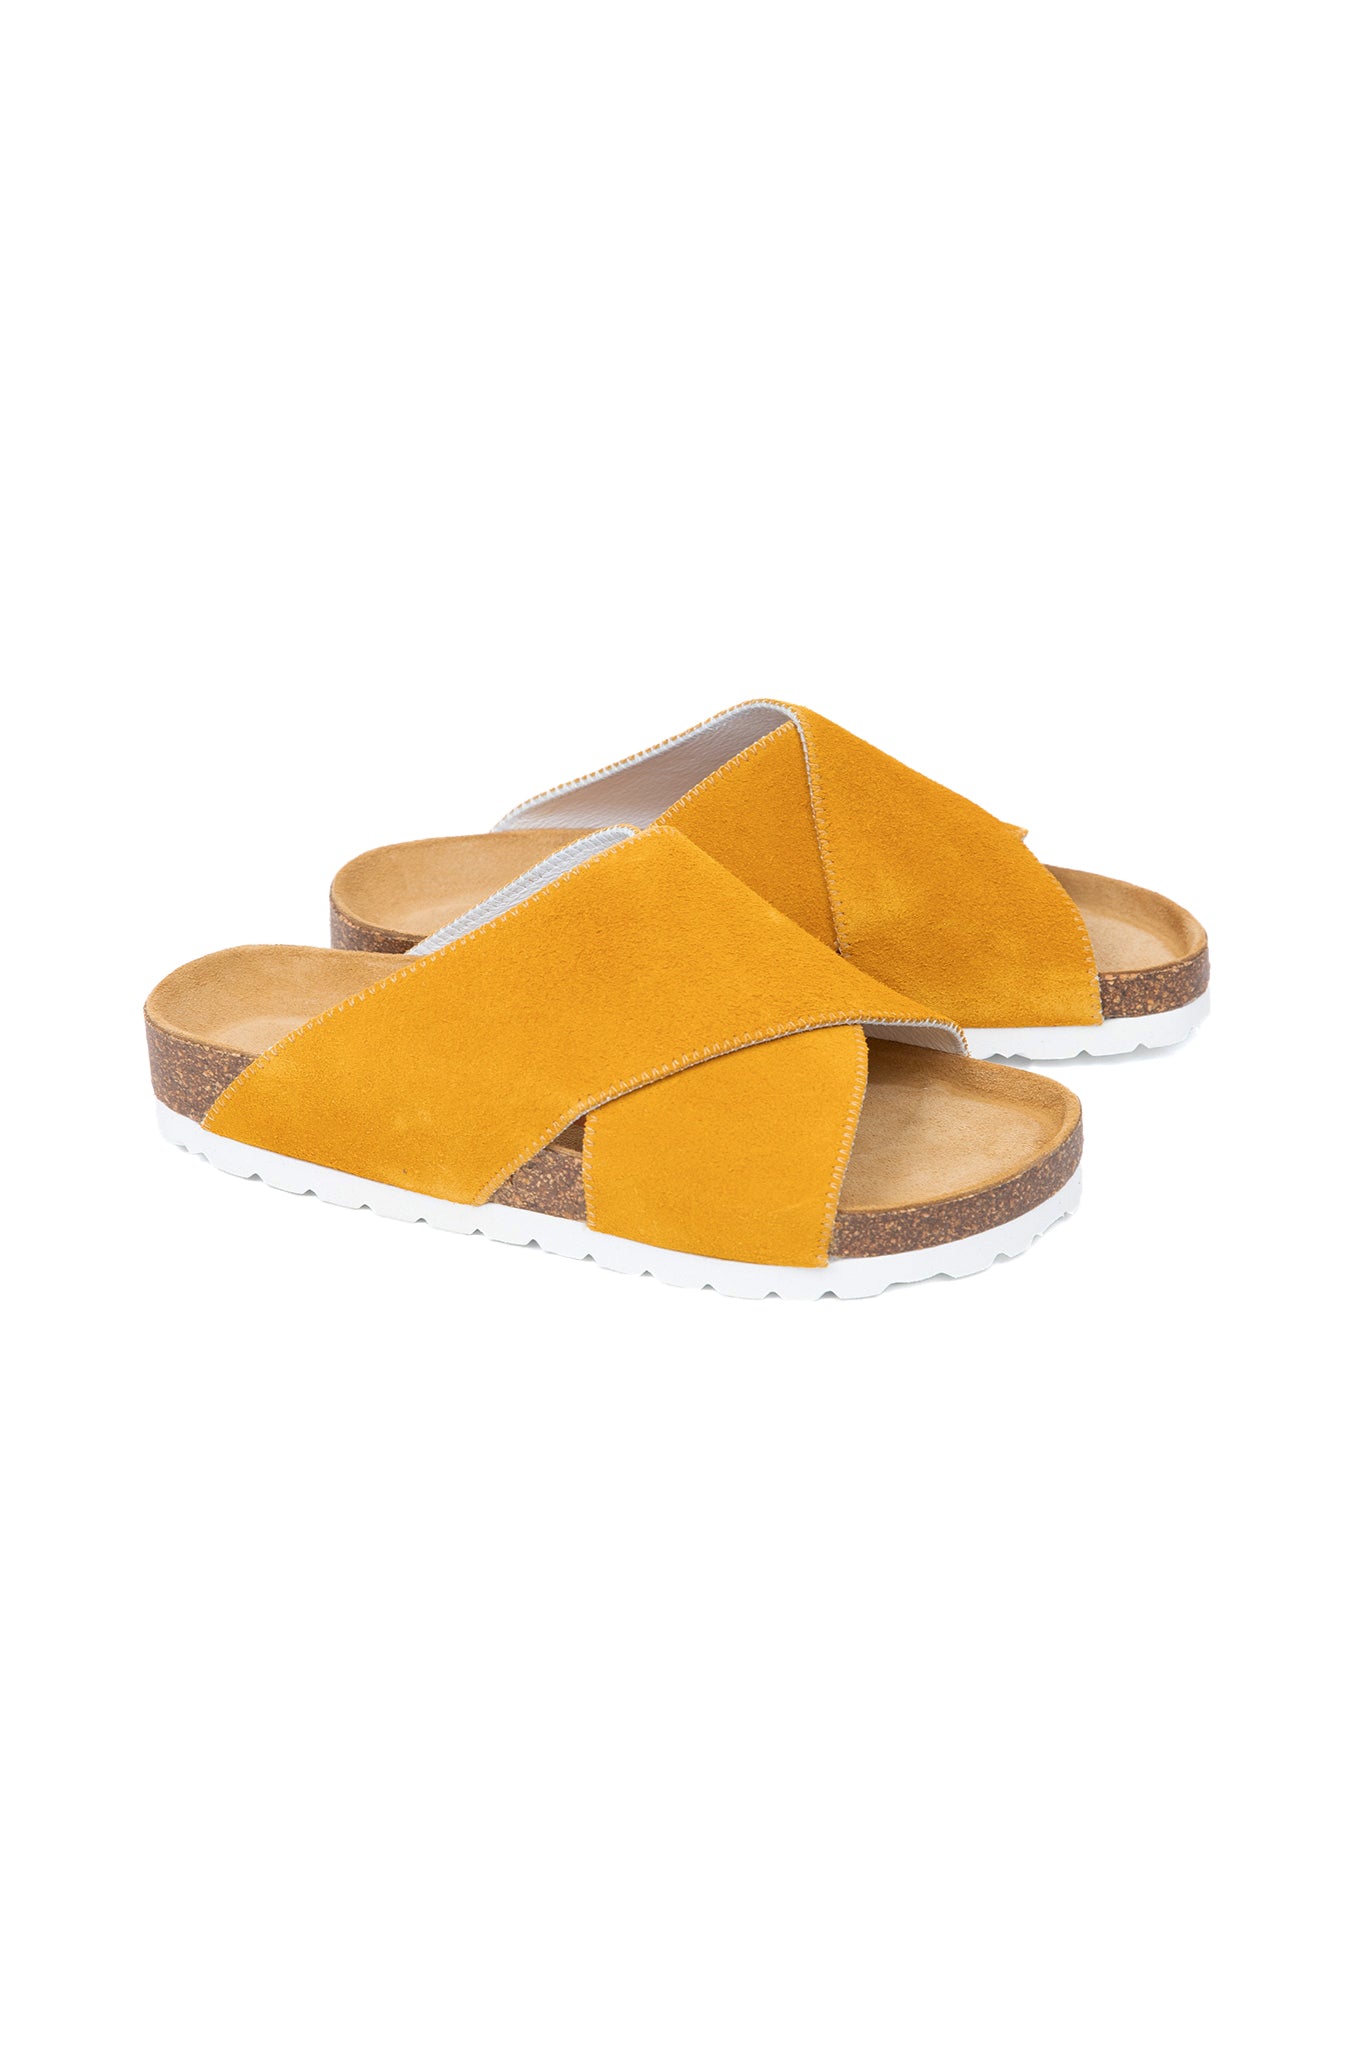 MAGNAFIED-Una-Cross-Over-Sandals-Yellow-Premium-Italian-Suede